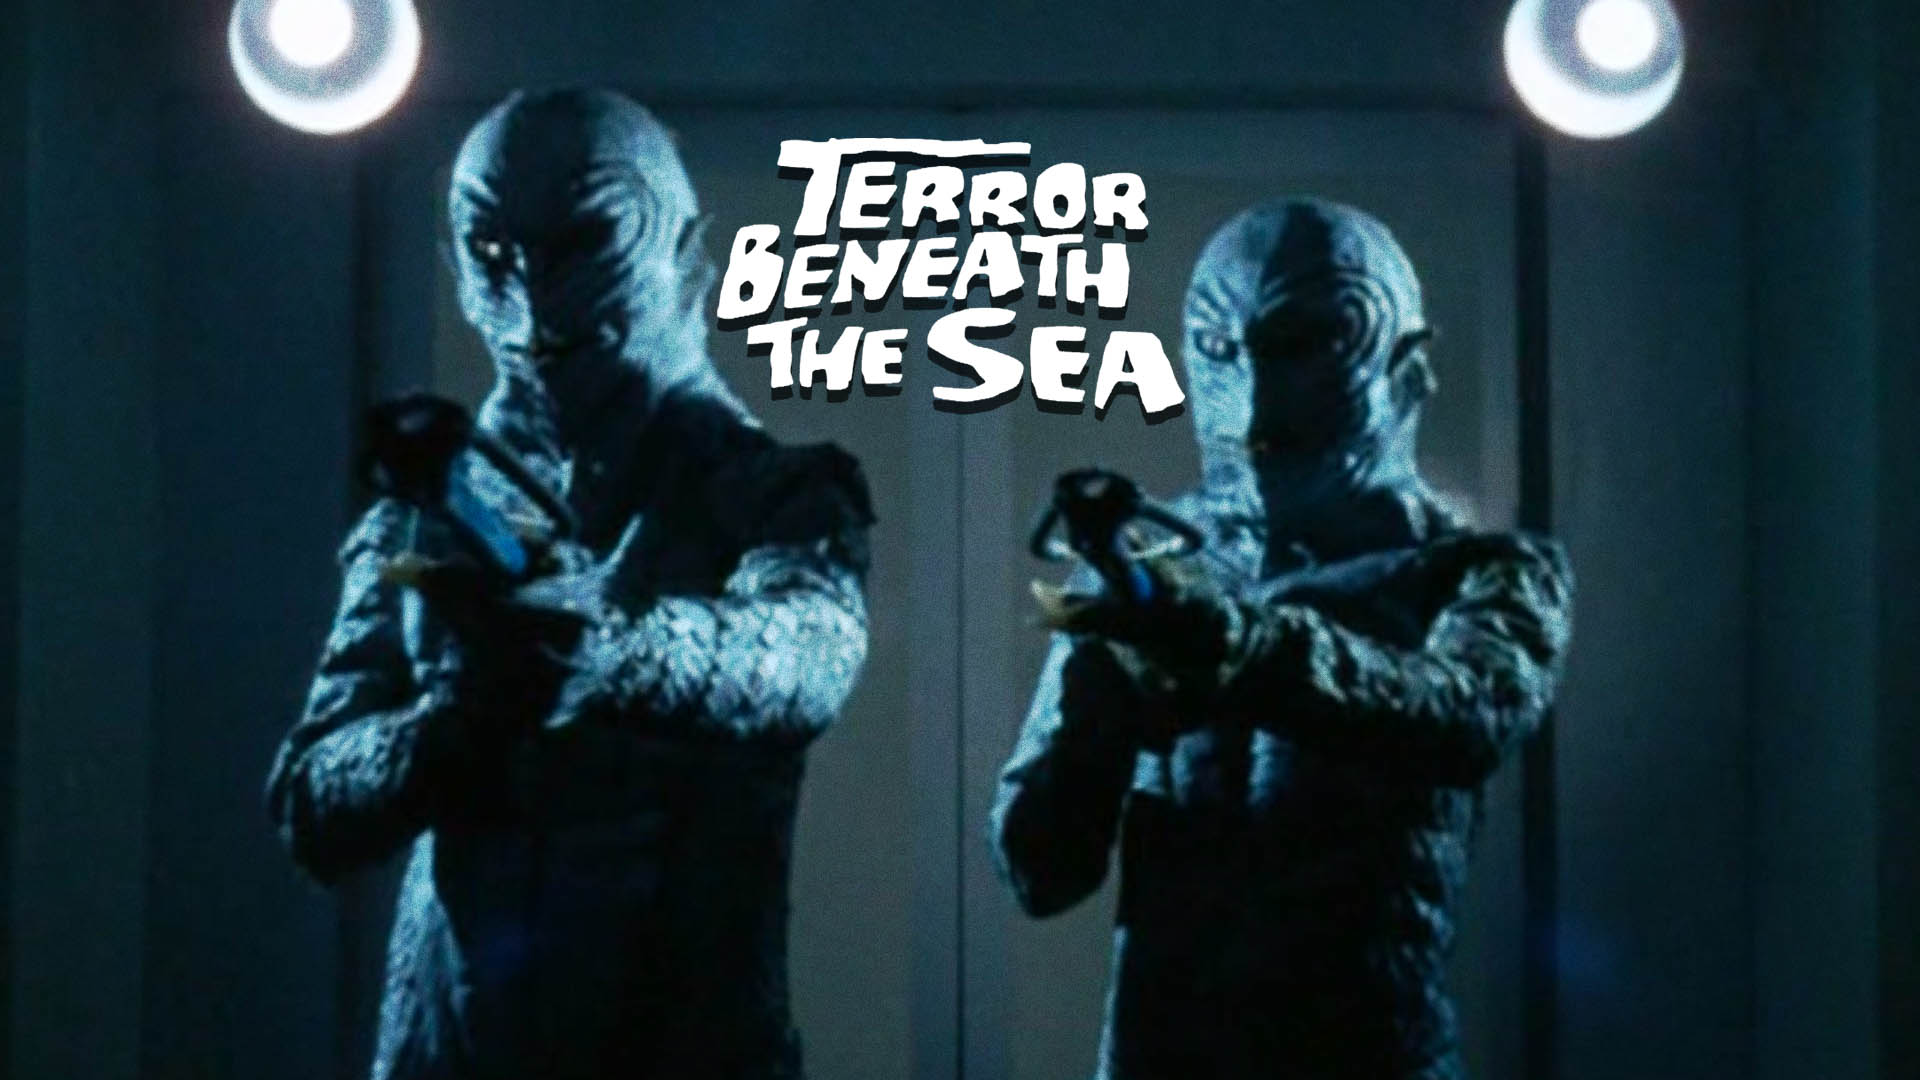 Terror Beneath the Sea